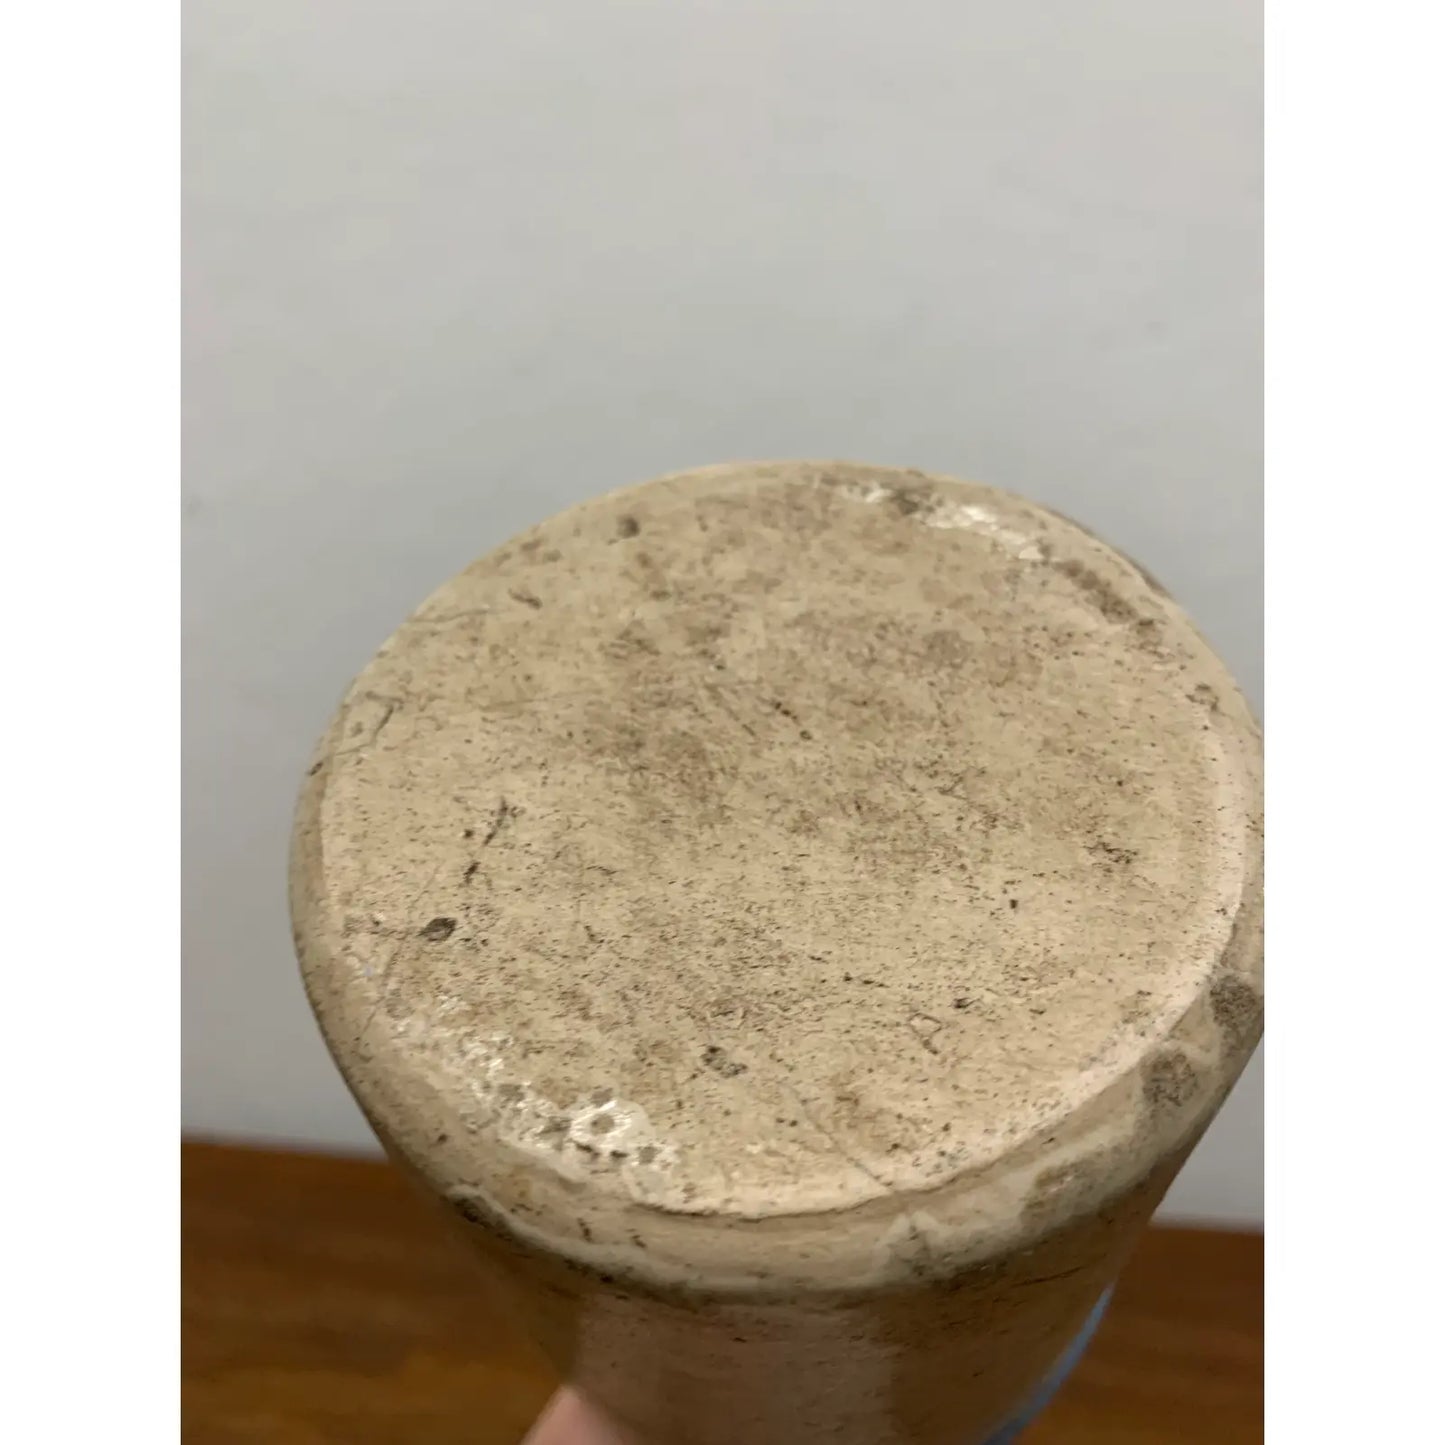 Antique Ceramic Beer Bottle From Argentina